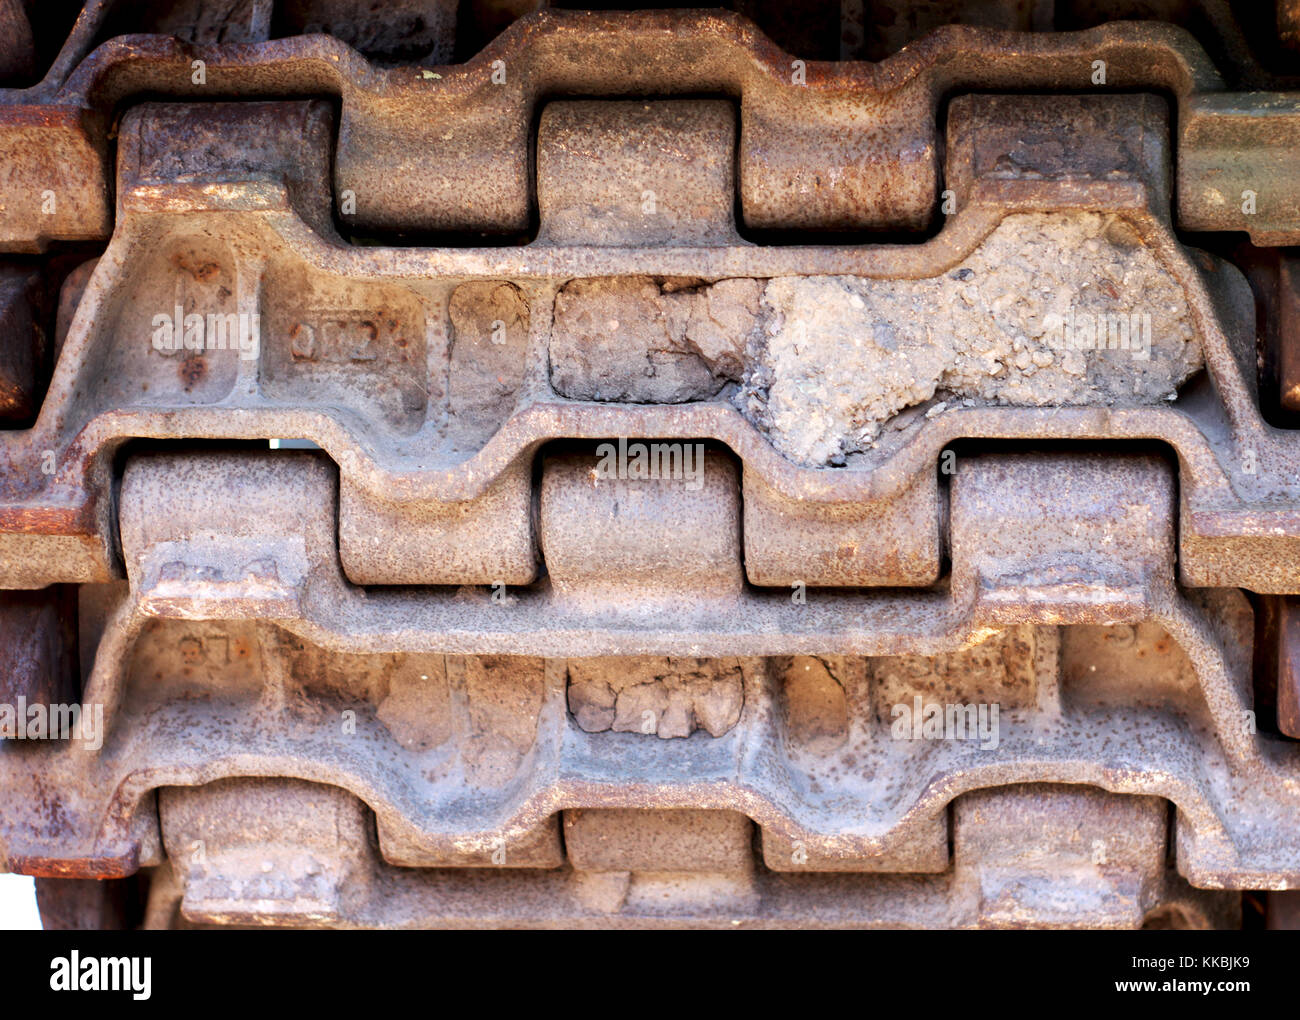 Abstract image of tank tracks. Tank tread tires. Steel textured tire tracks. Military transportation. Military vehicle tires. Steel texture. Stock Photo